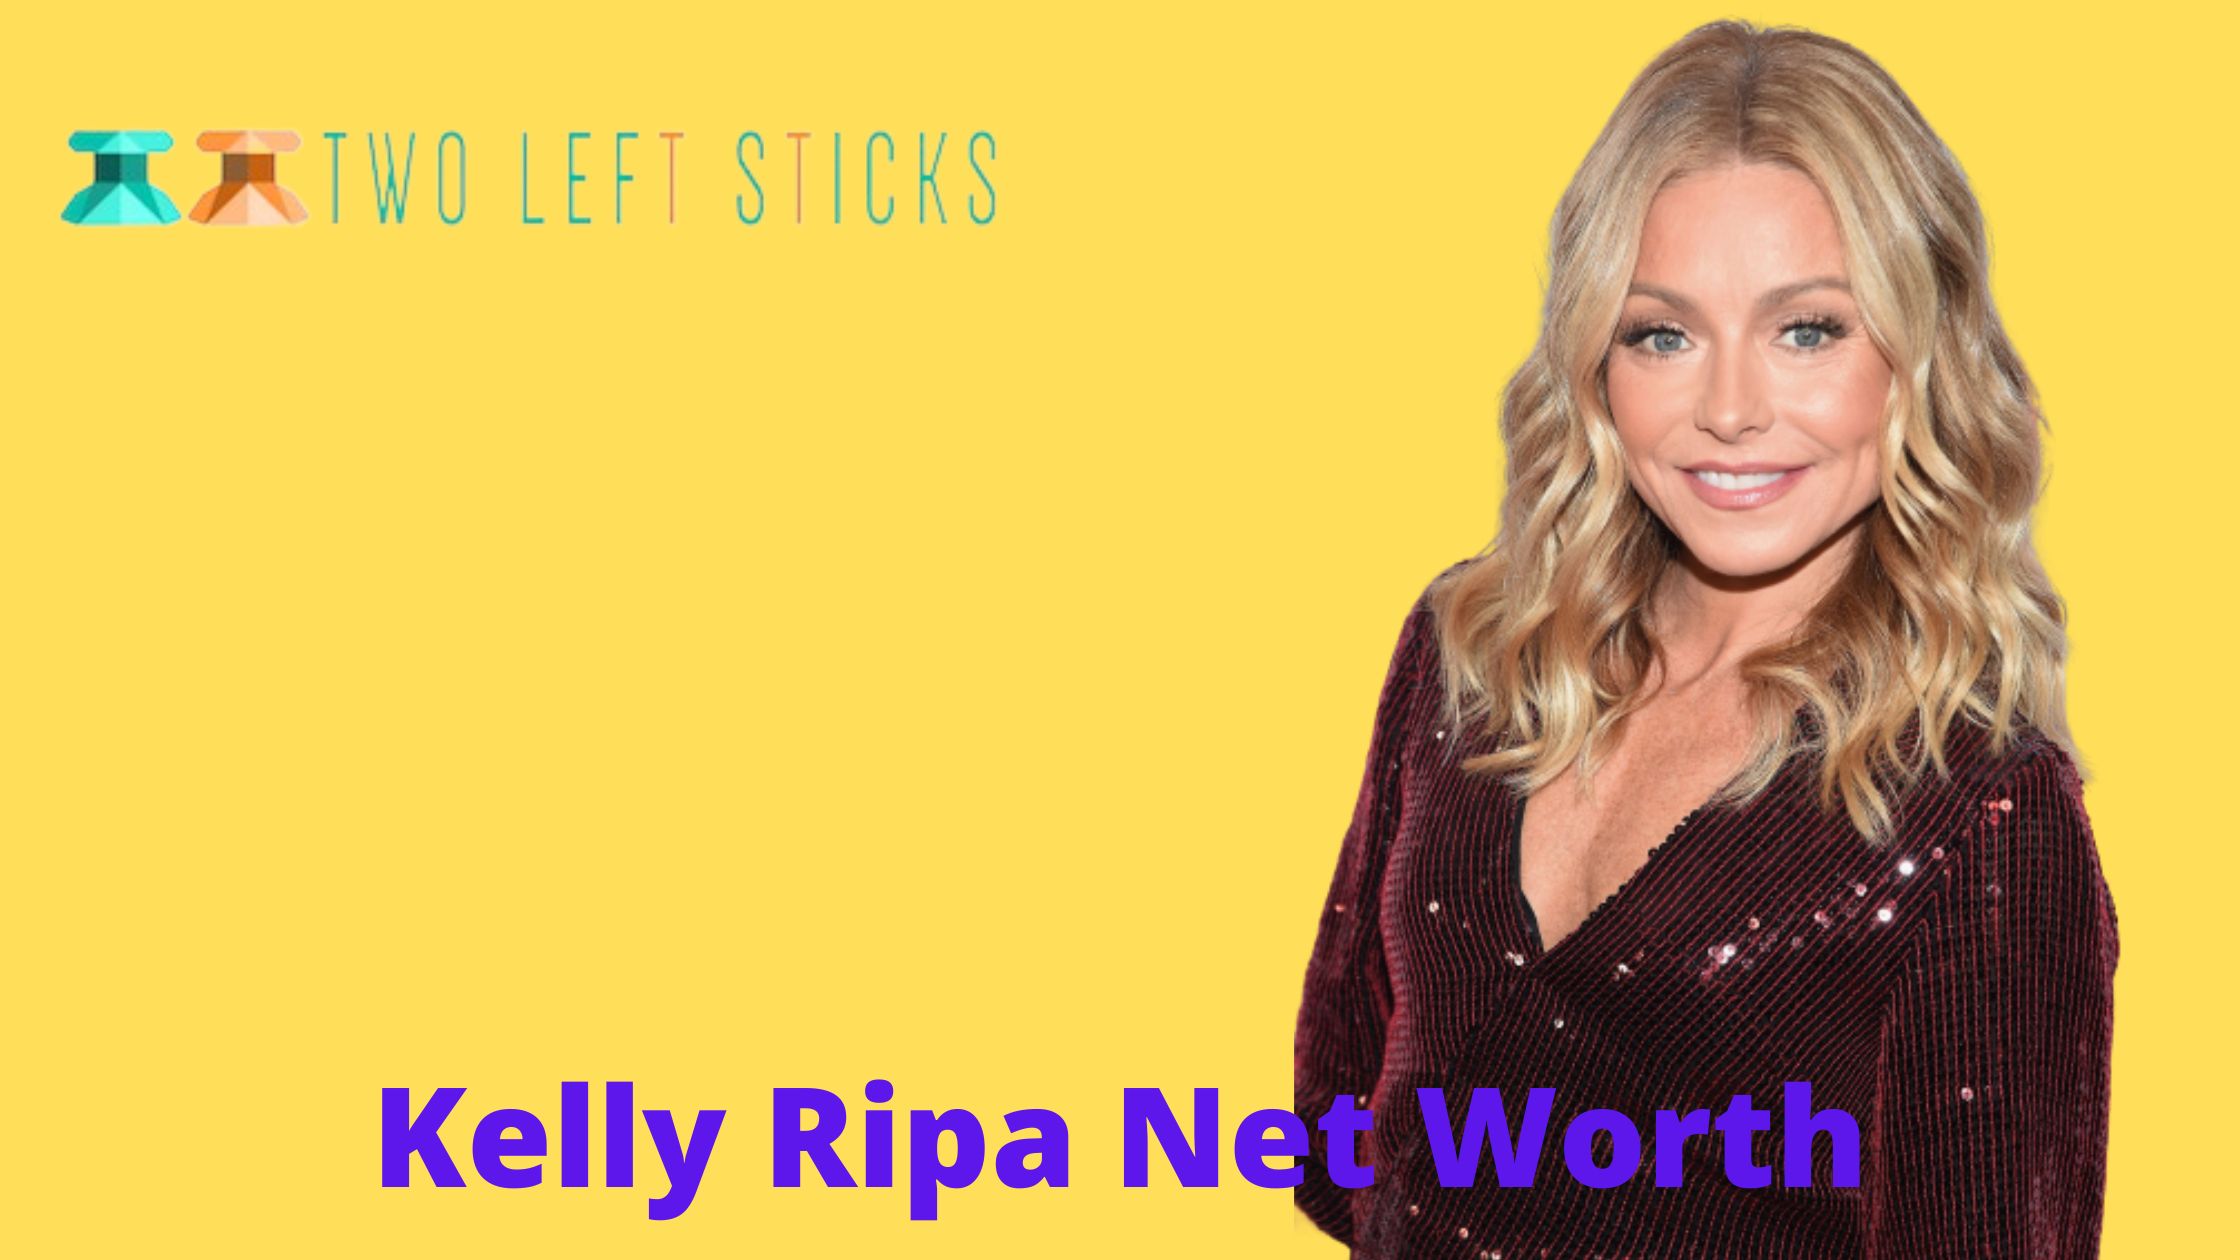 Kelly-Ripa-net-worth-twoleftsticks(1)